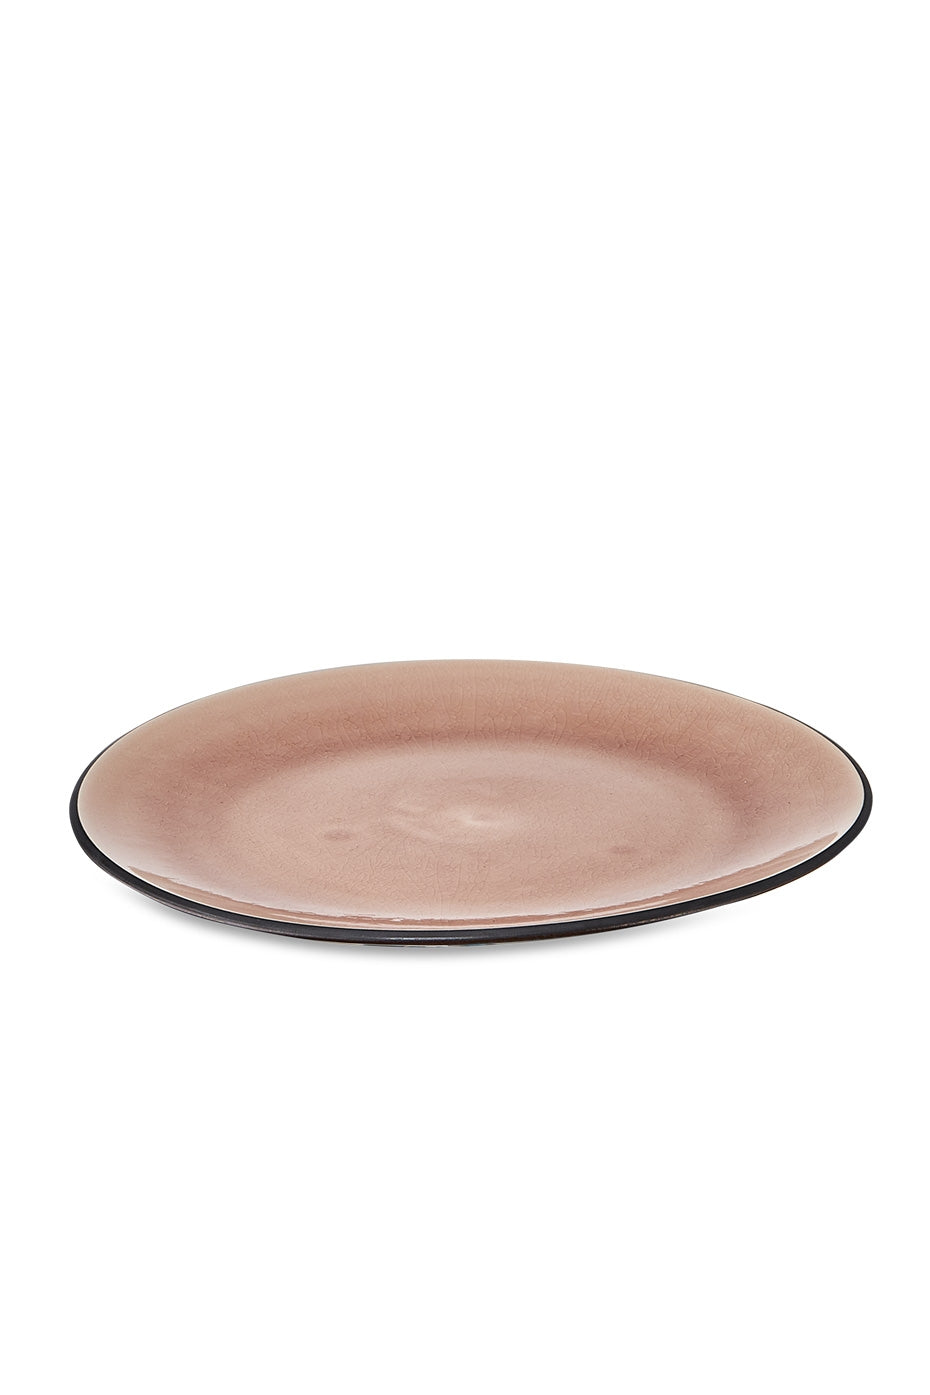 Nkuku Dusky Pink Bao Ceramic Dinner Plate